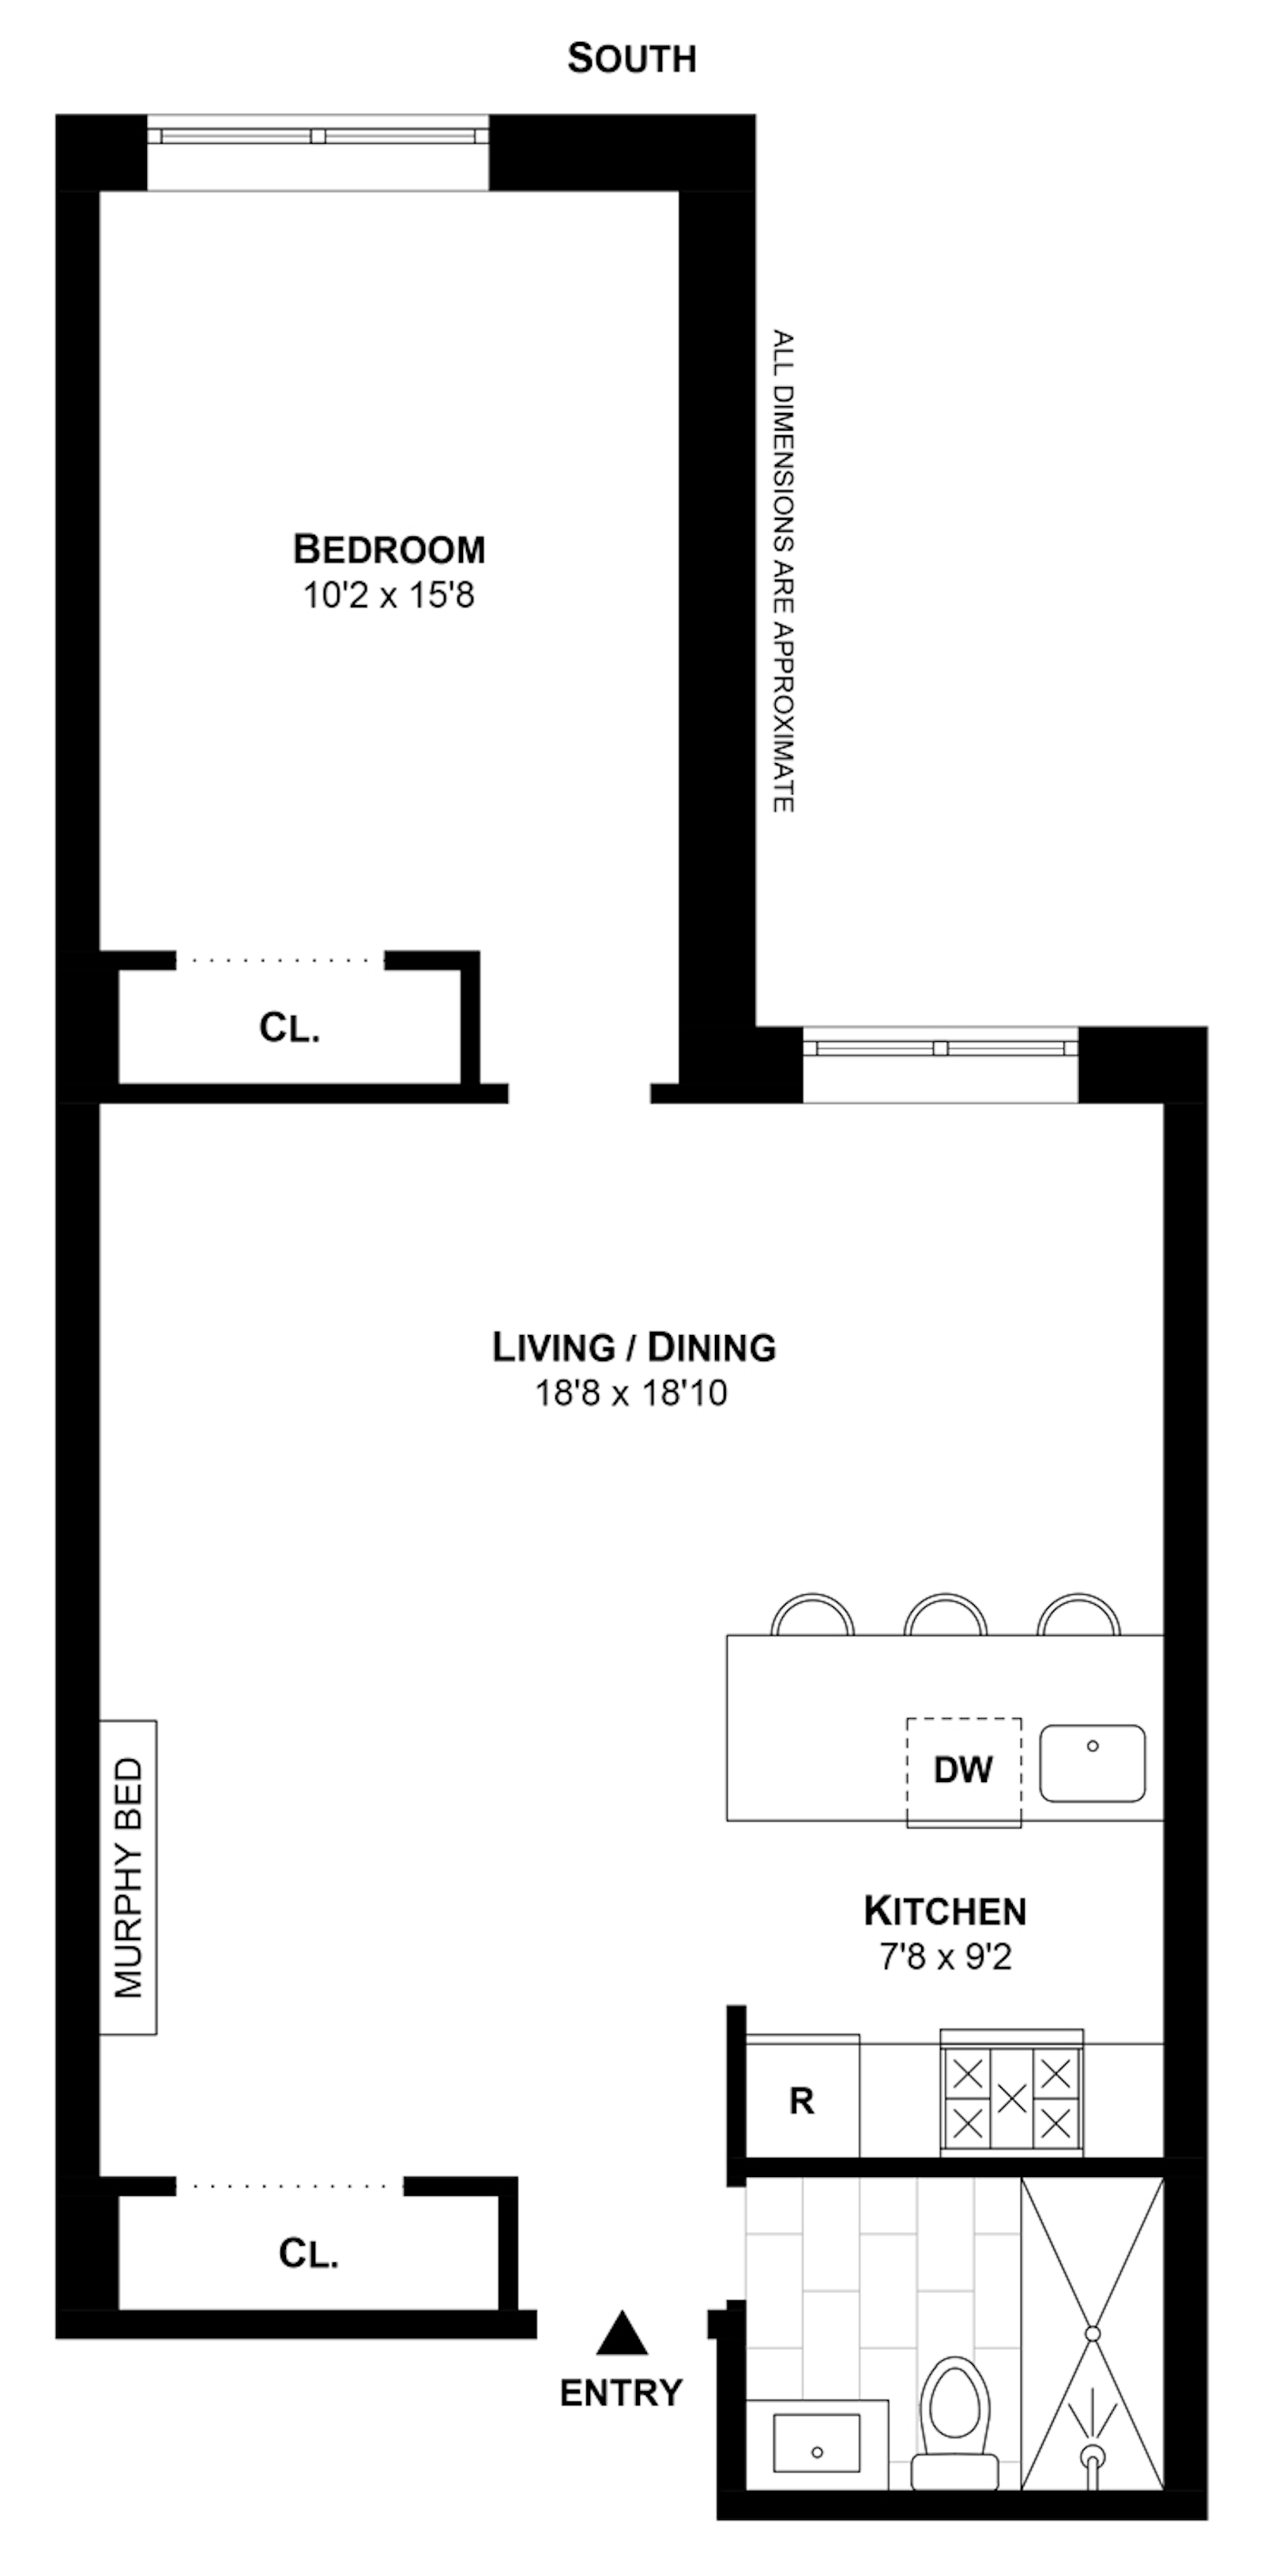 Floorplan for 28 West 96th Street, 6